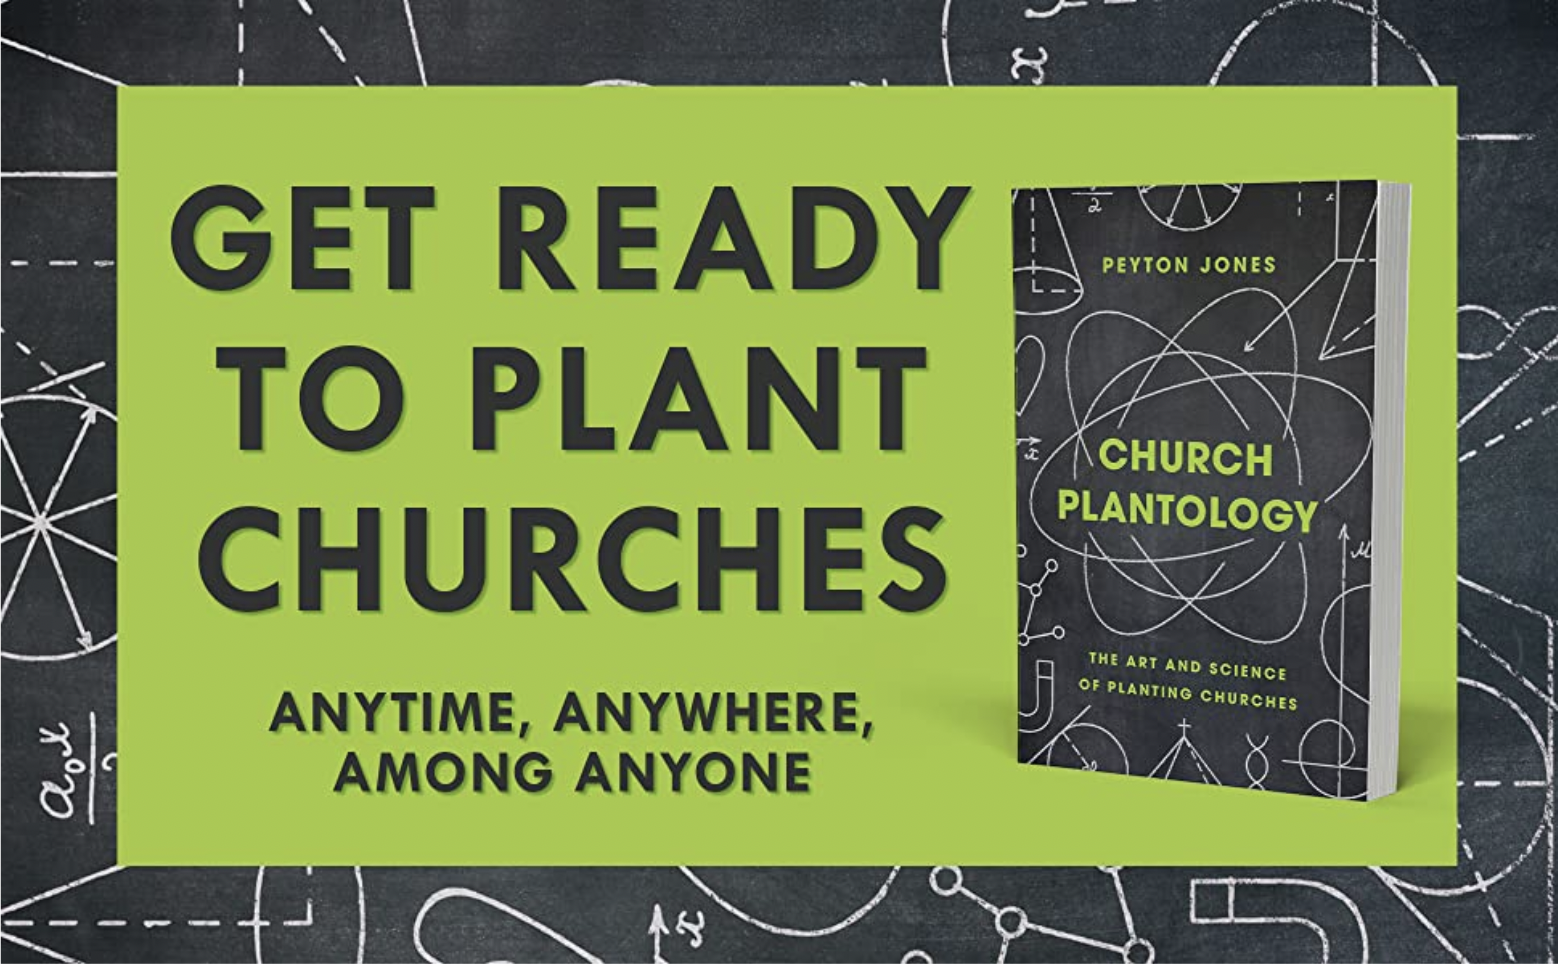 Church Plantology: an interview with Peyton Jones